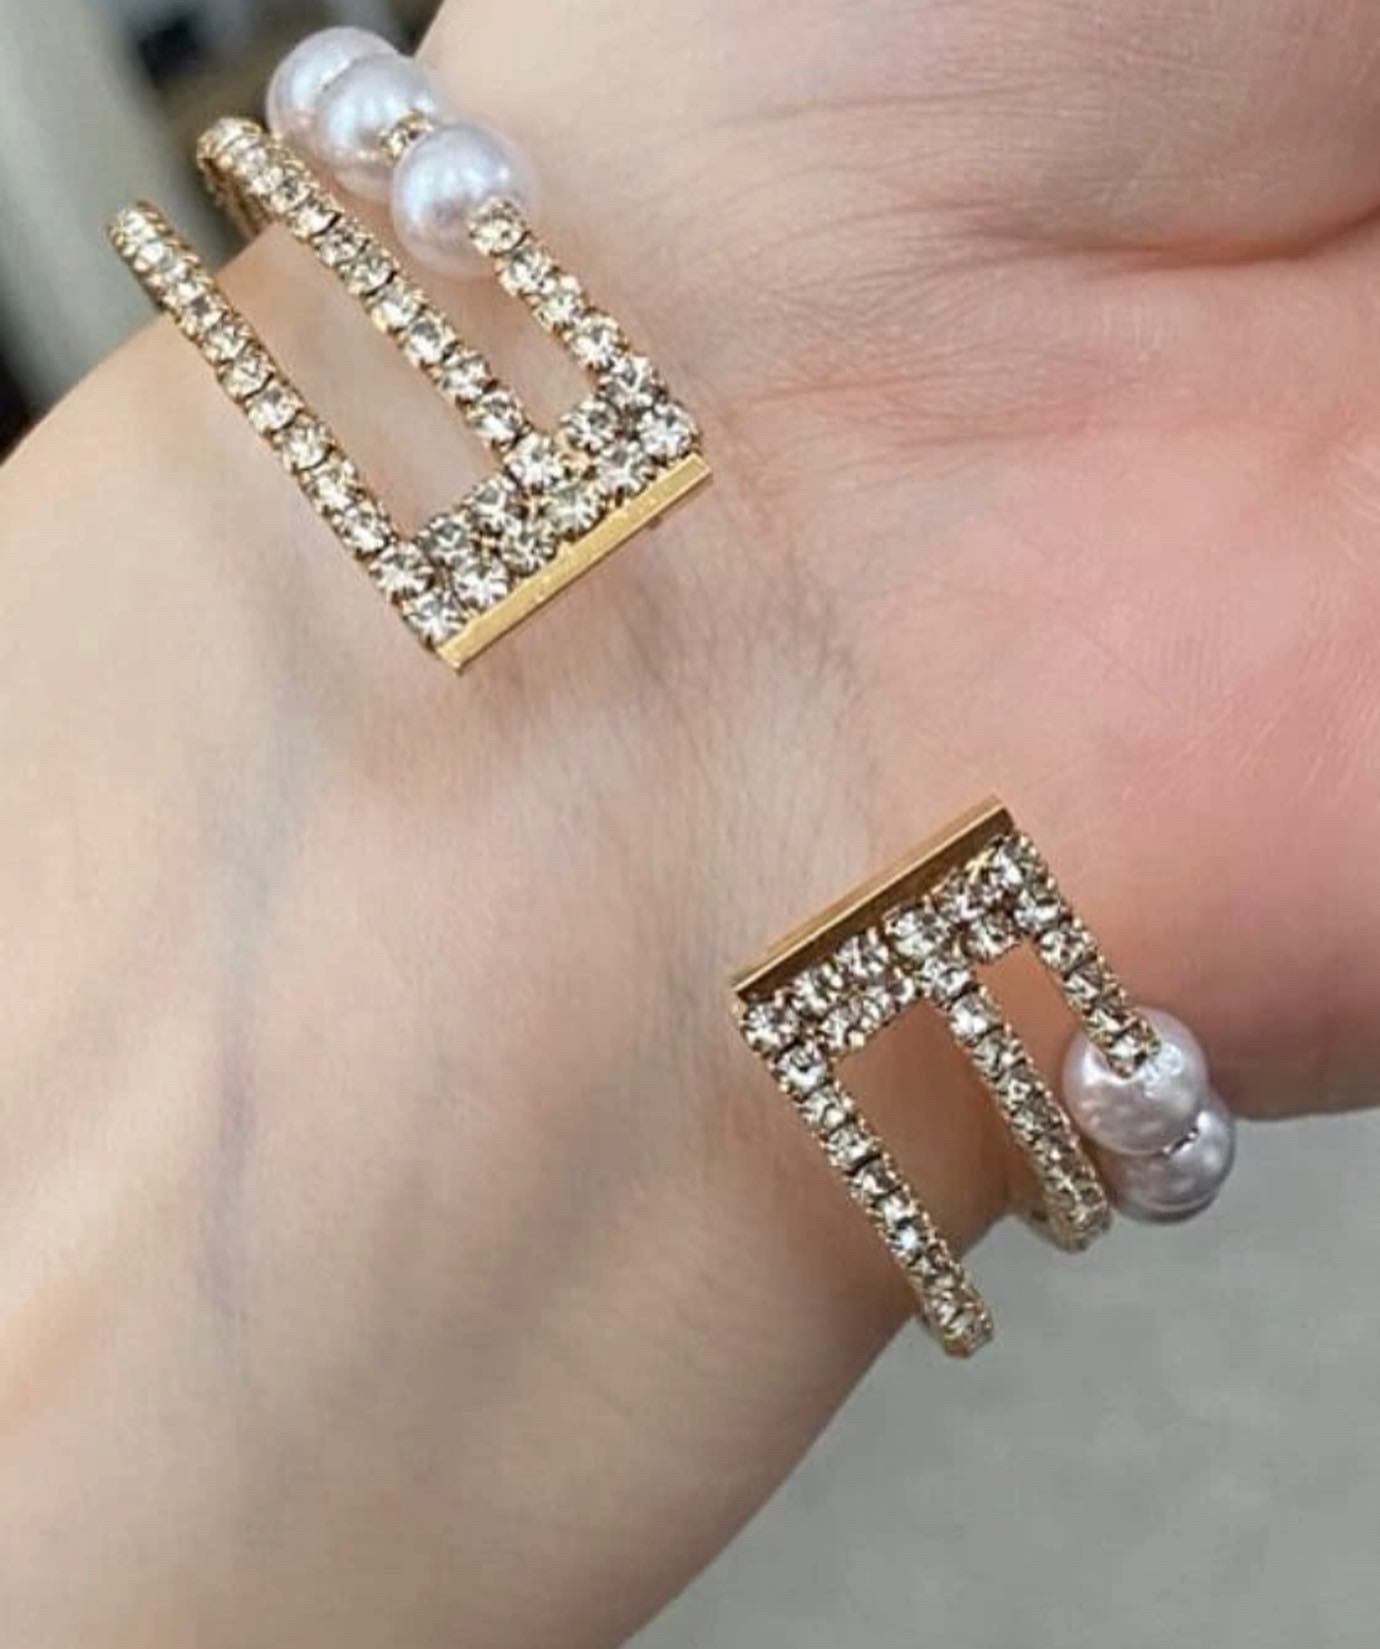 Absolutely beautiful pearl freshwater bracelet.